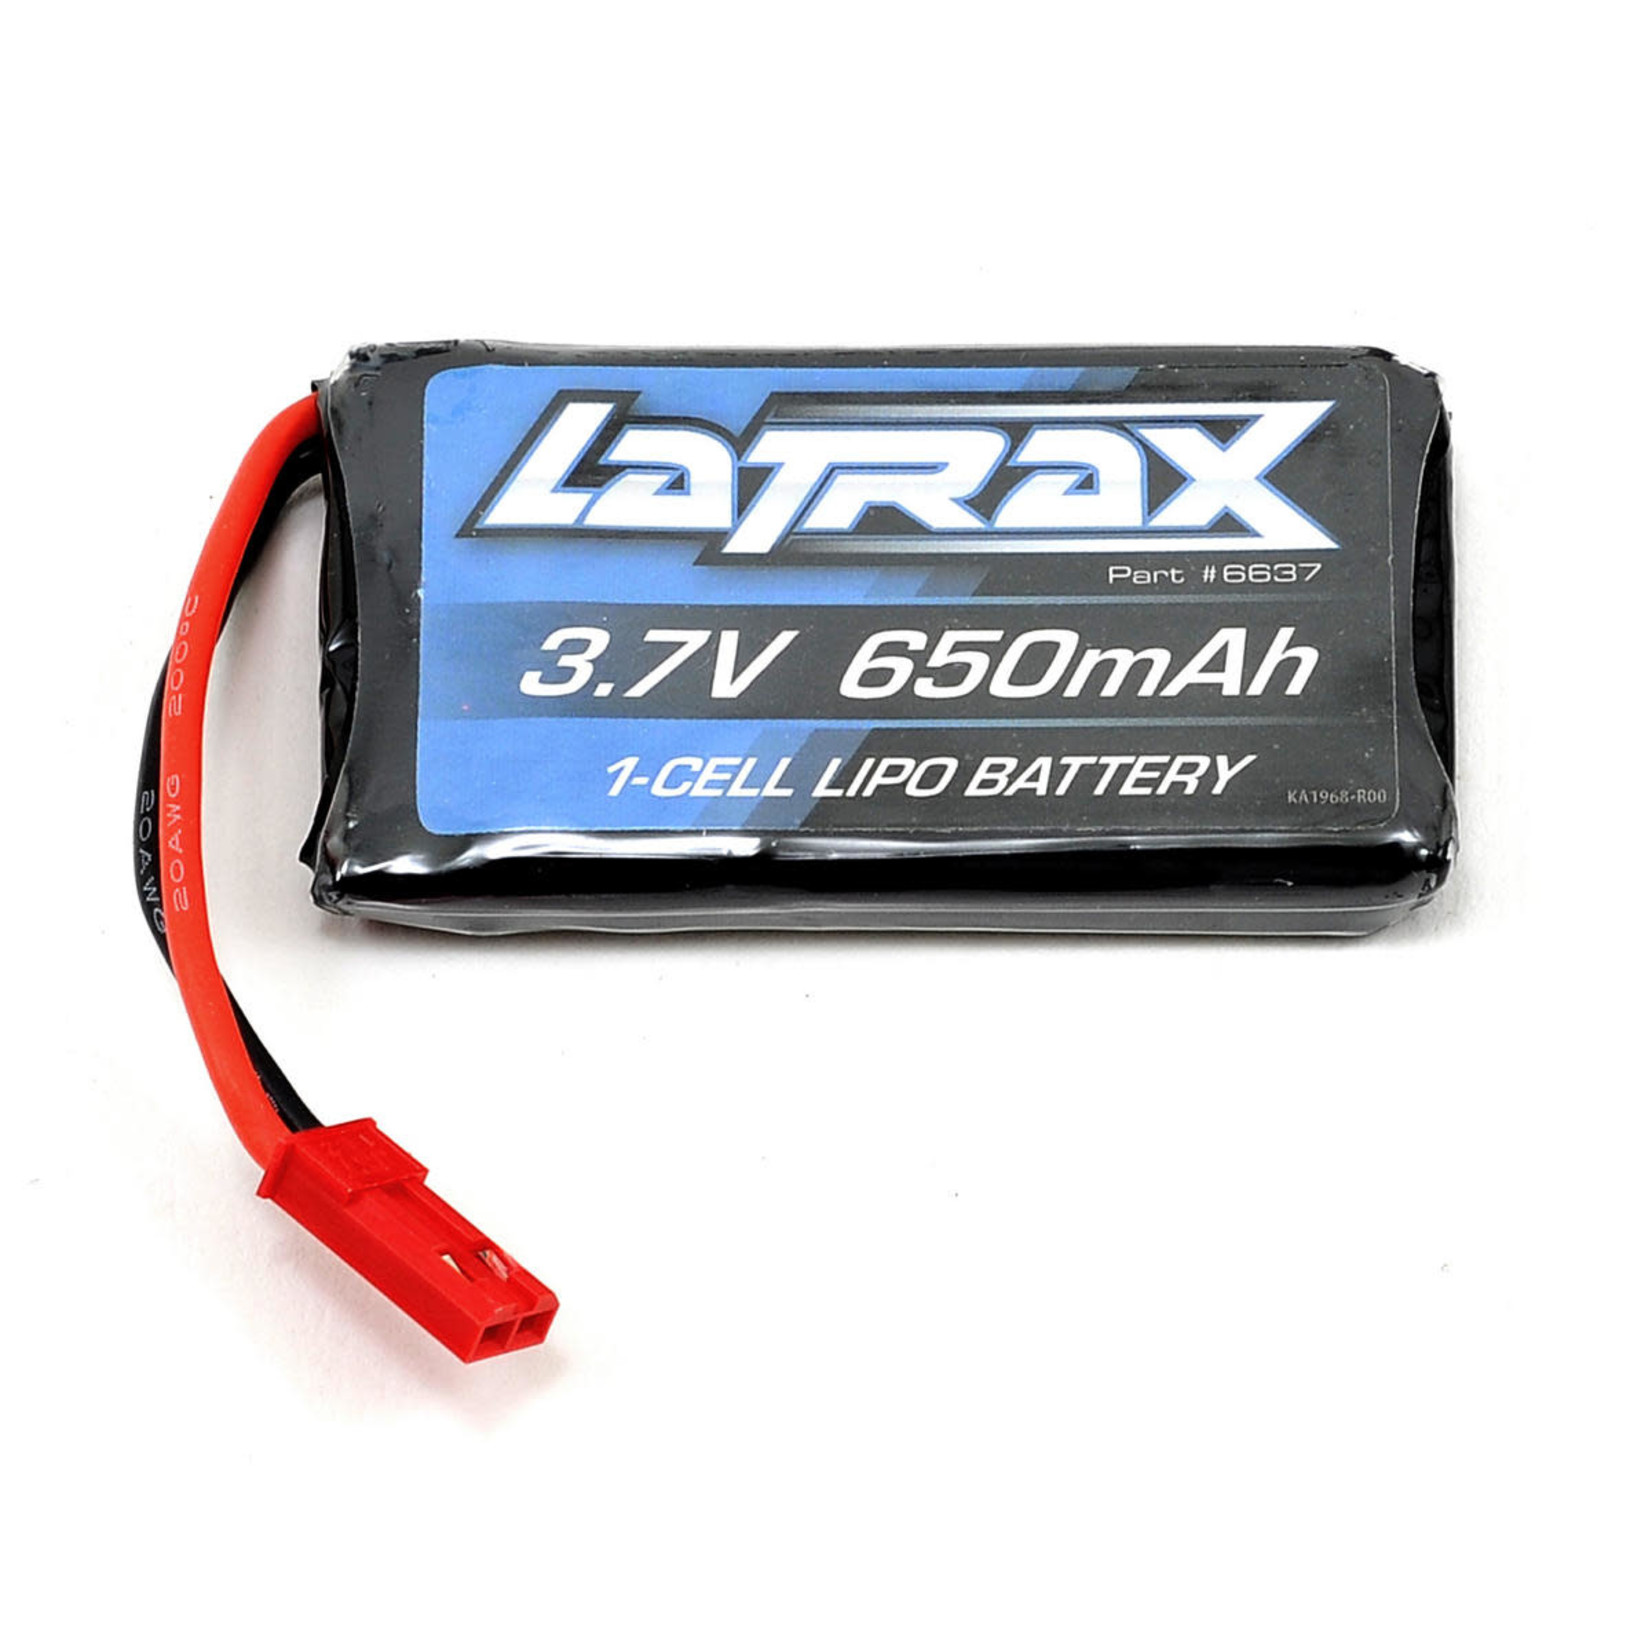 Traxxas Traxxas LaTrax Alias LiPo Battery (3.7V/650mAh) #6637